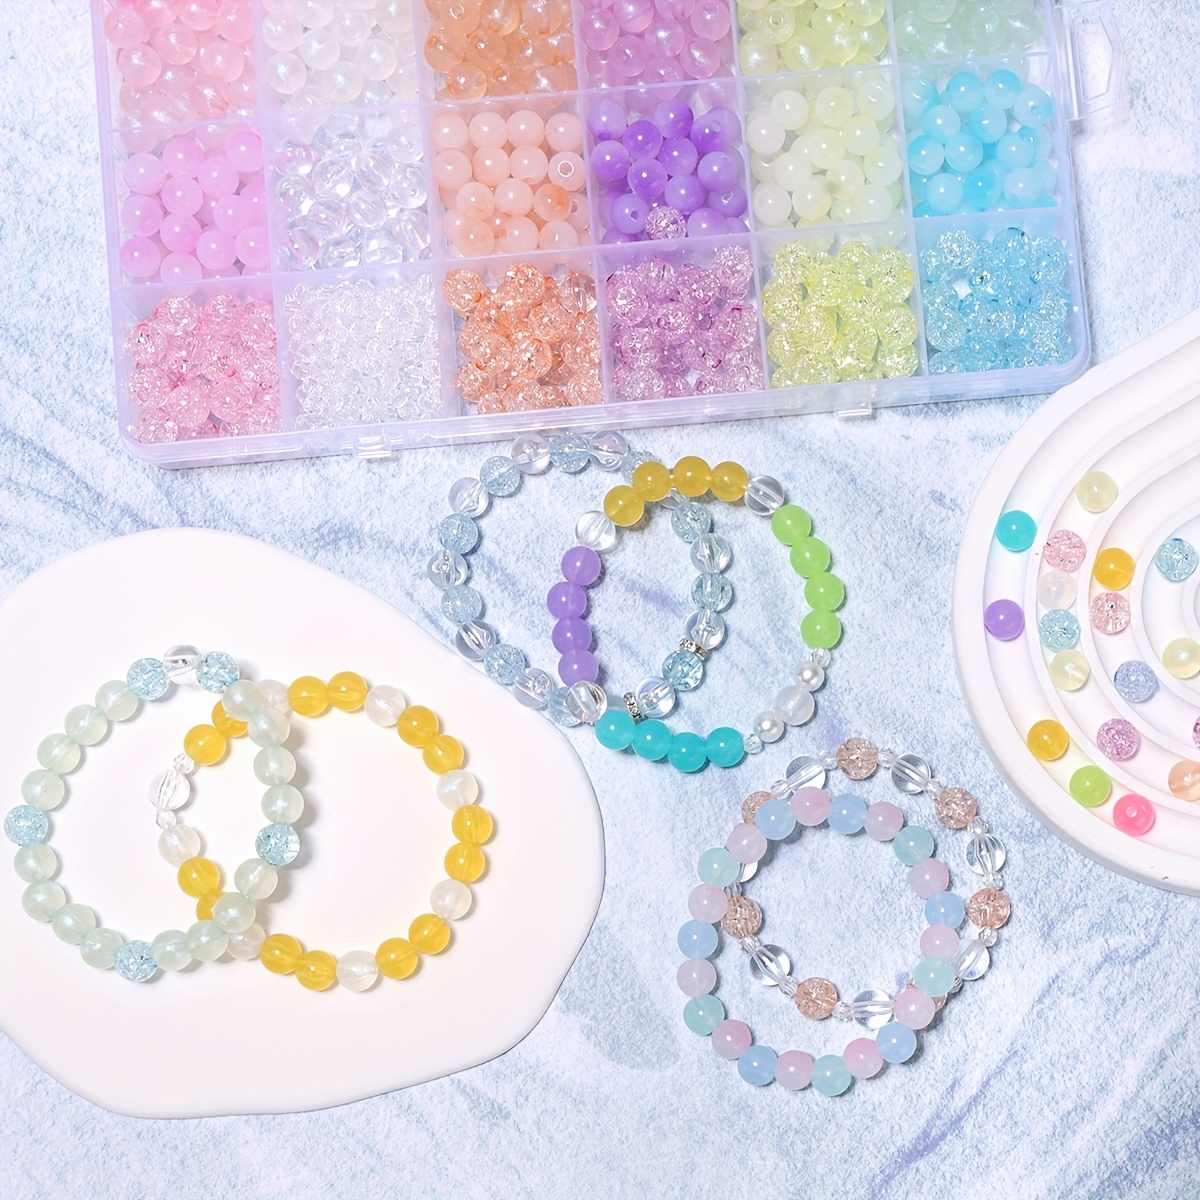 DIY Beads Bracelet Making Kit for Girls Bracelet Necklace Jewelry Making Kit,  DIY Bulk Acrylic Candy Colored Beads Jewelry Making, Birthday Gift